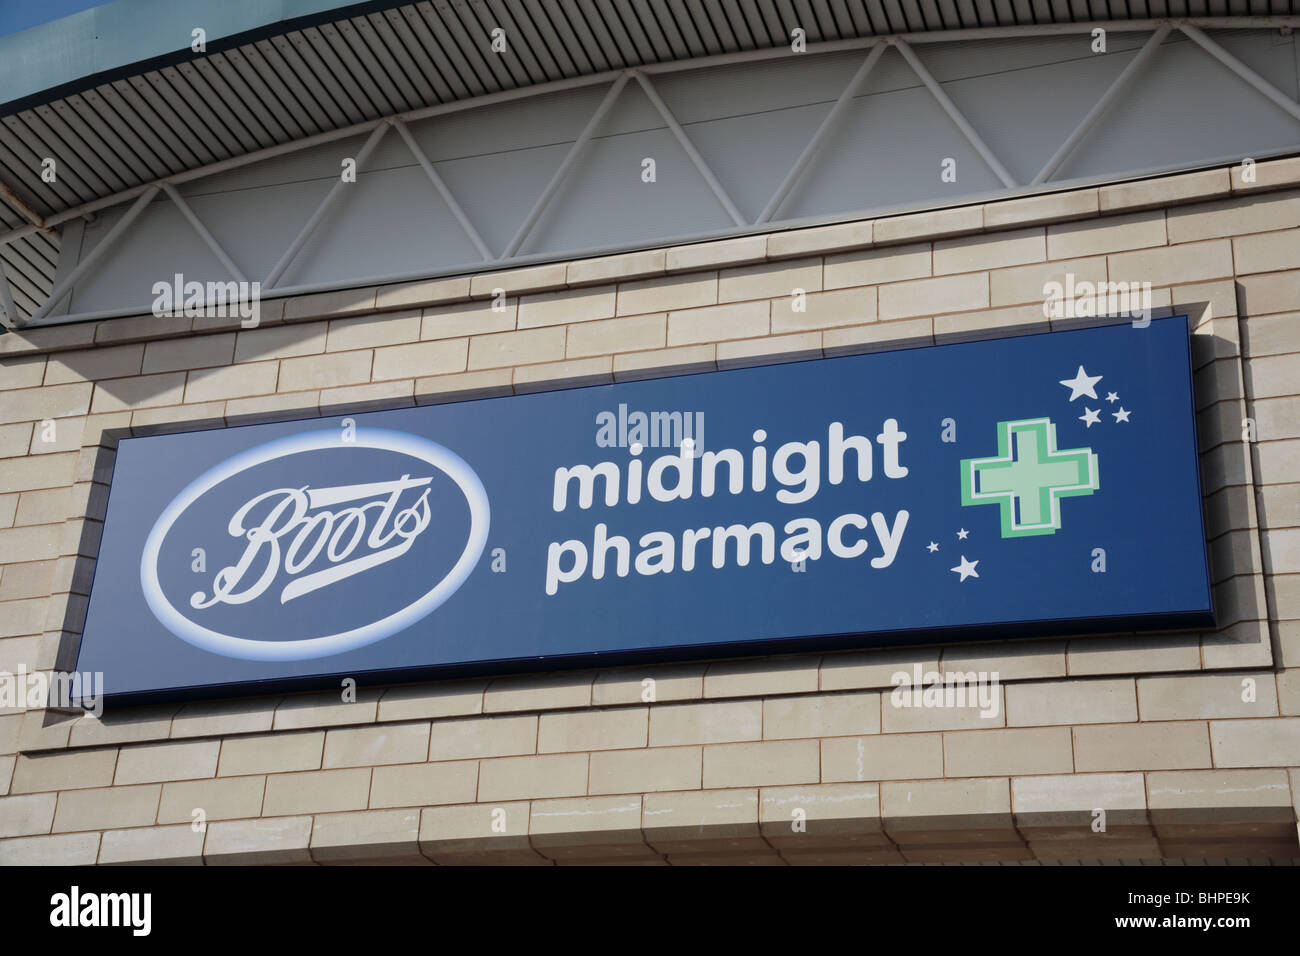 Boots Midnight Pharmacy signage Stock Photo